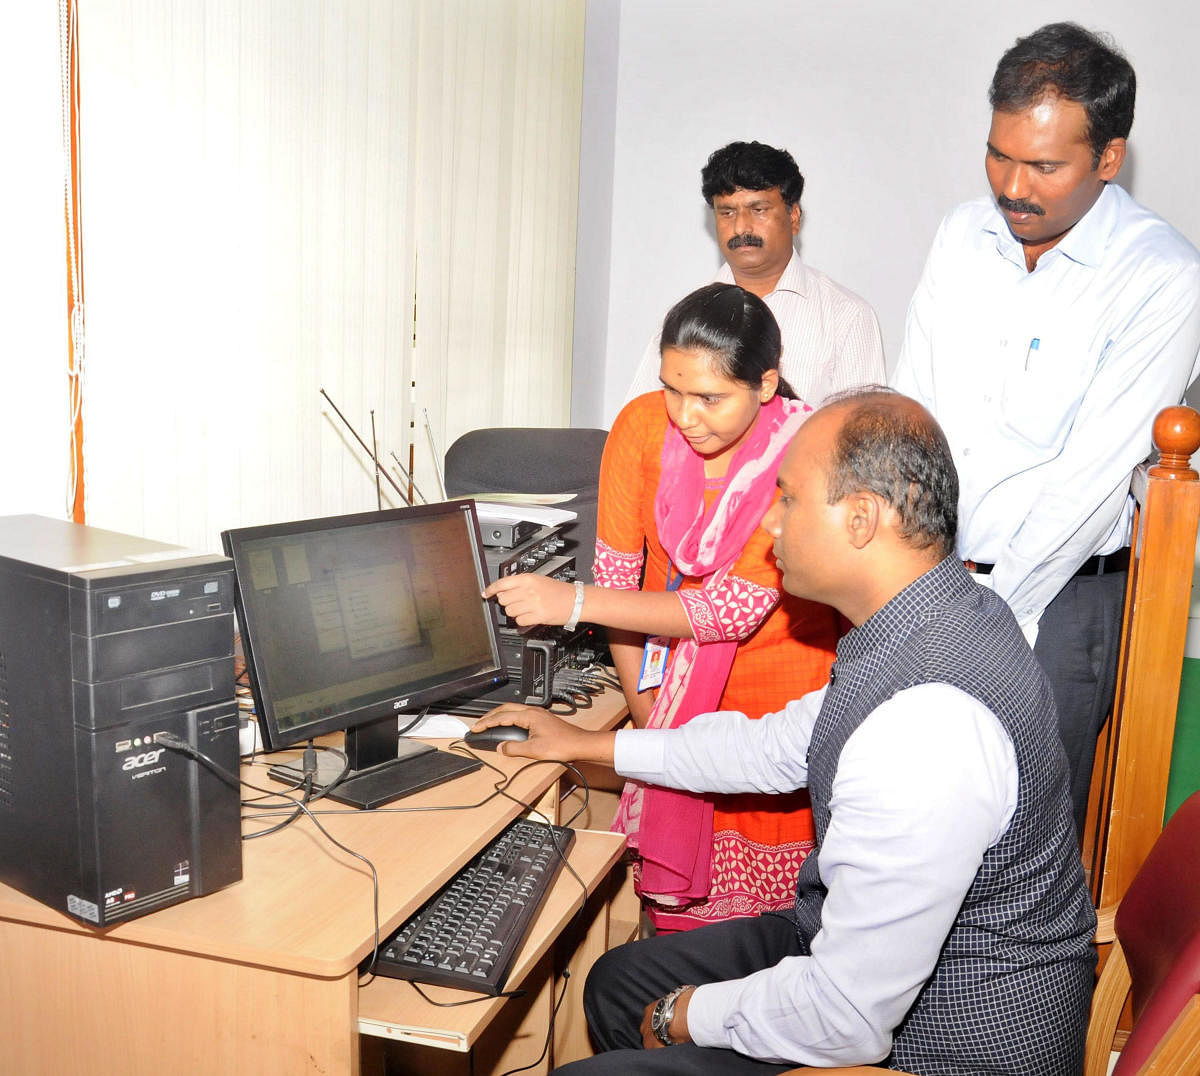 Deputy Commissioner D Randeep inaugurates the e-office facility at Mysuru taluk office, at the Mini Vidhana Soudha in Nazarbad, Mysuru on Monday. Additional Deputy Commissioner T Yogeesh and Tahsildar Ramesh Babu are seen.